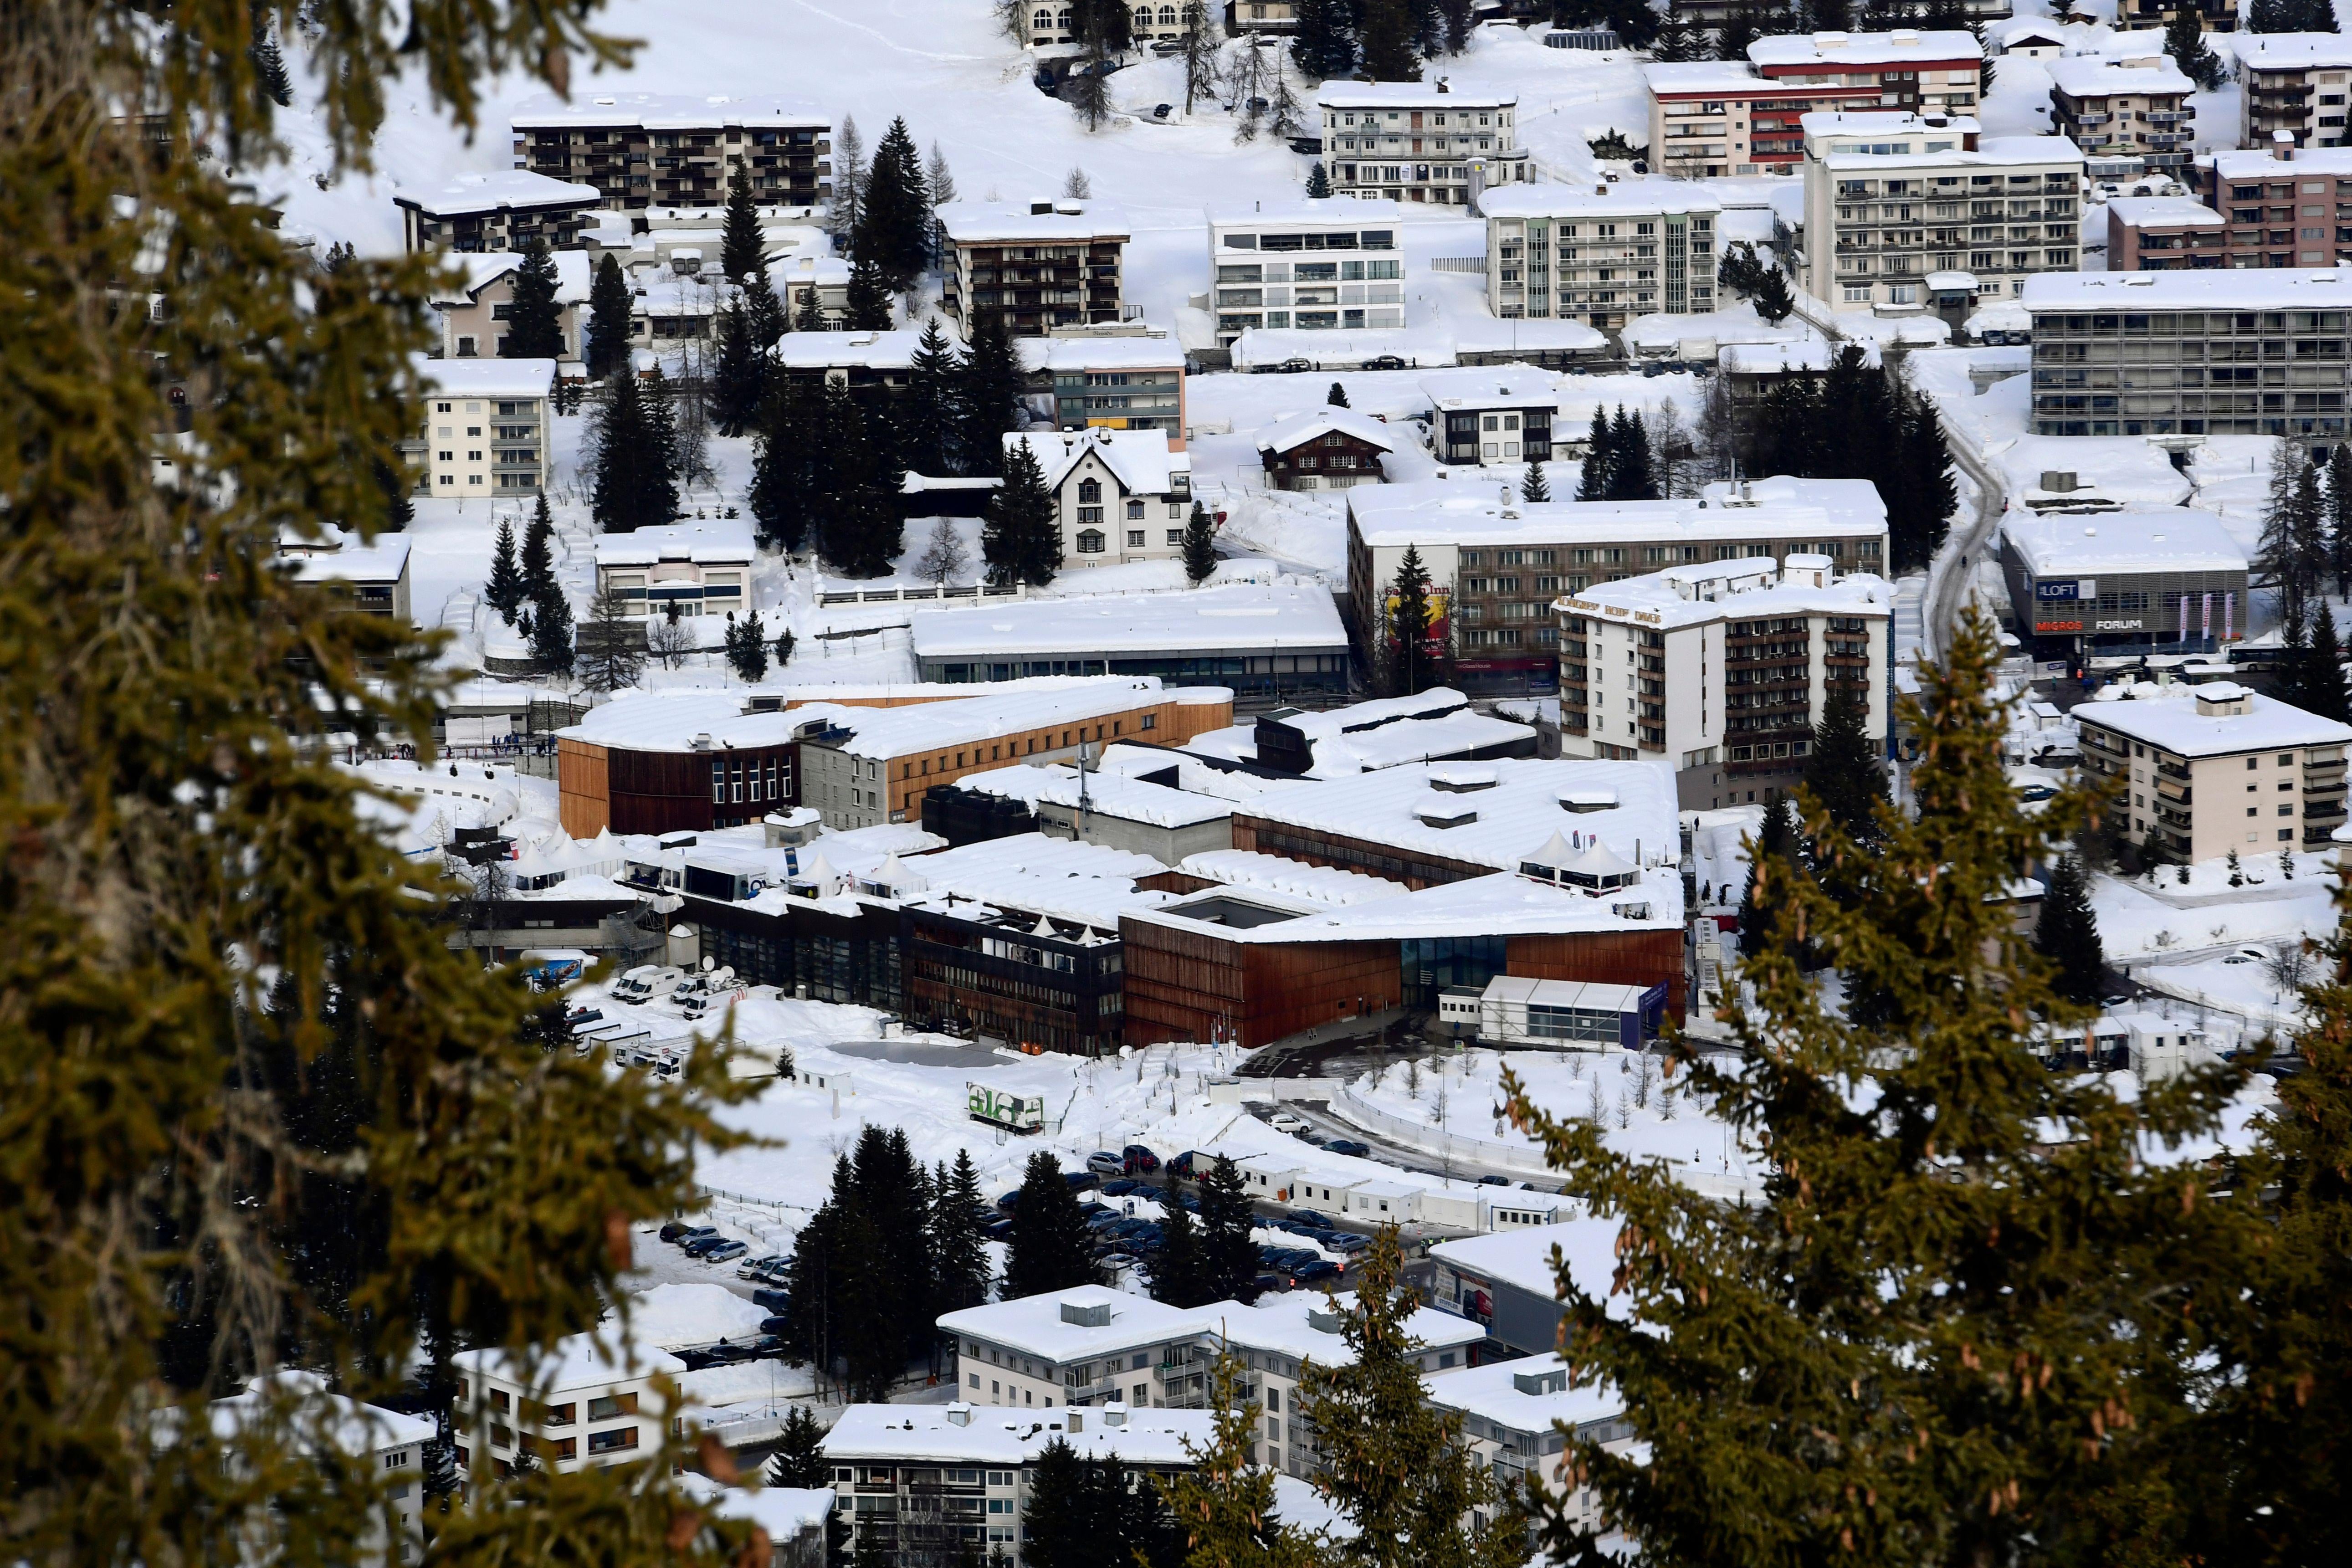 The buildings housing the World Economic Forum in Davos, Switzerland